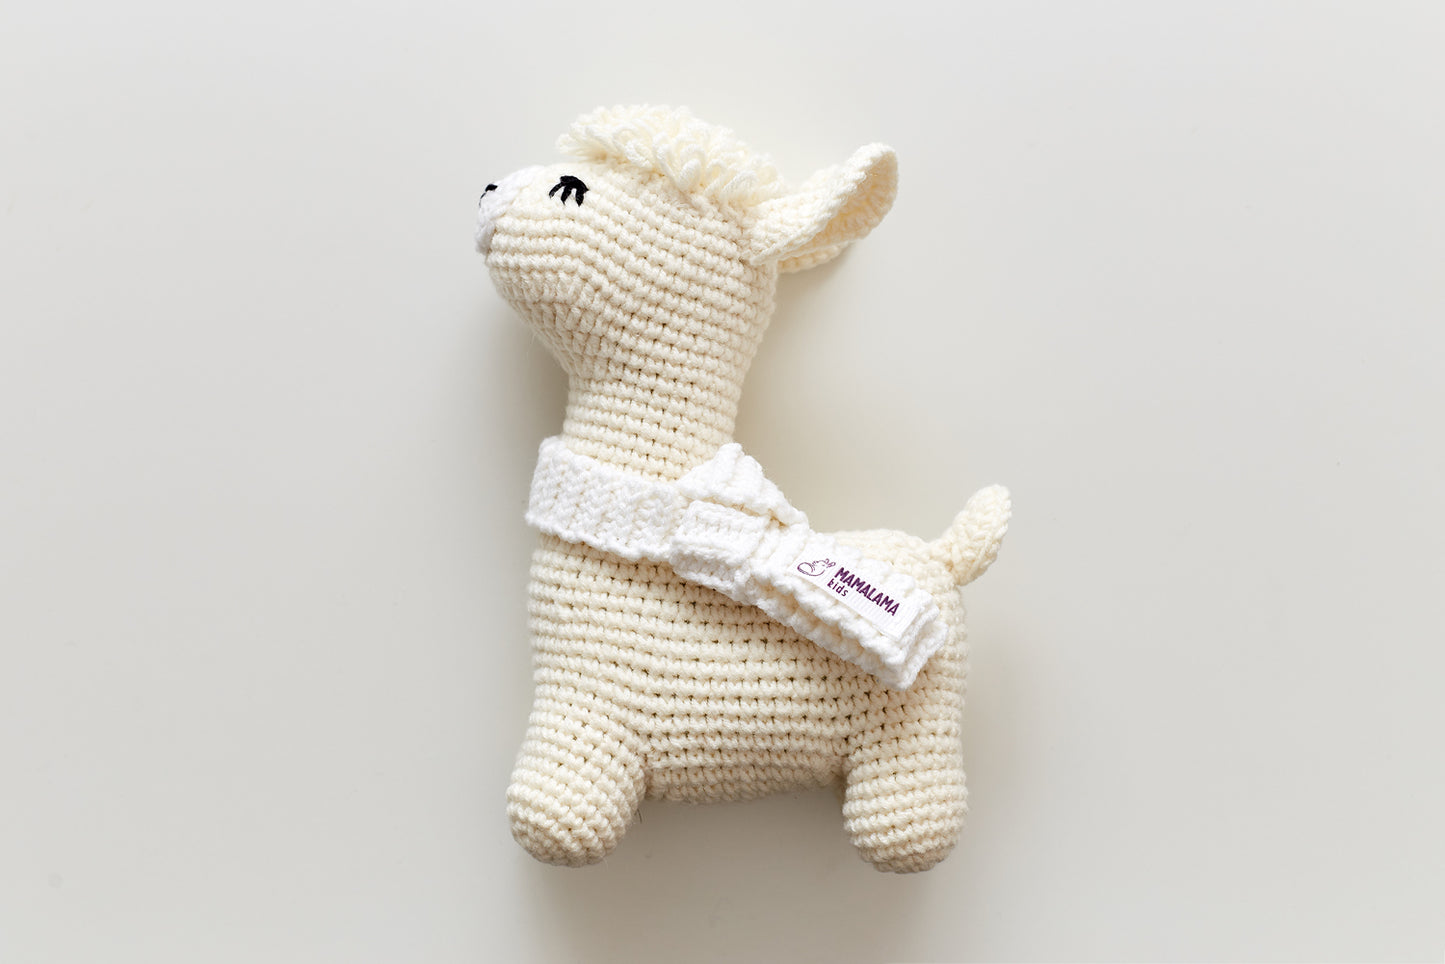 Llama toy & booties pregnancy gift box